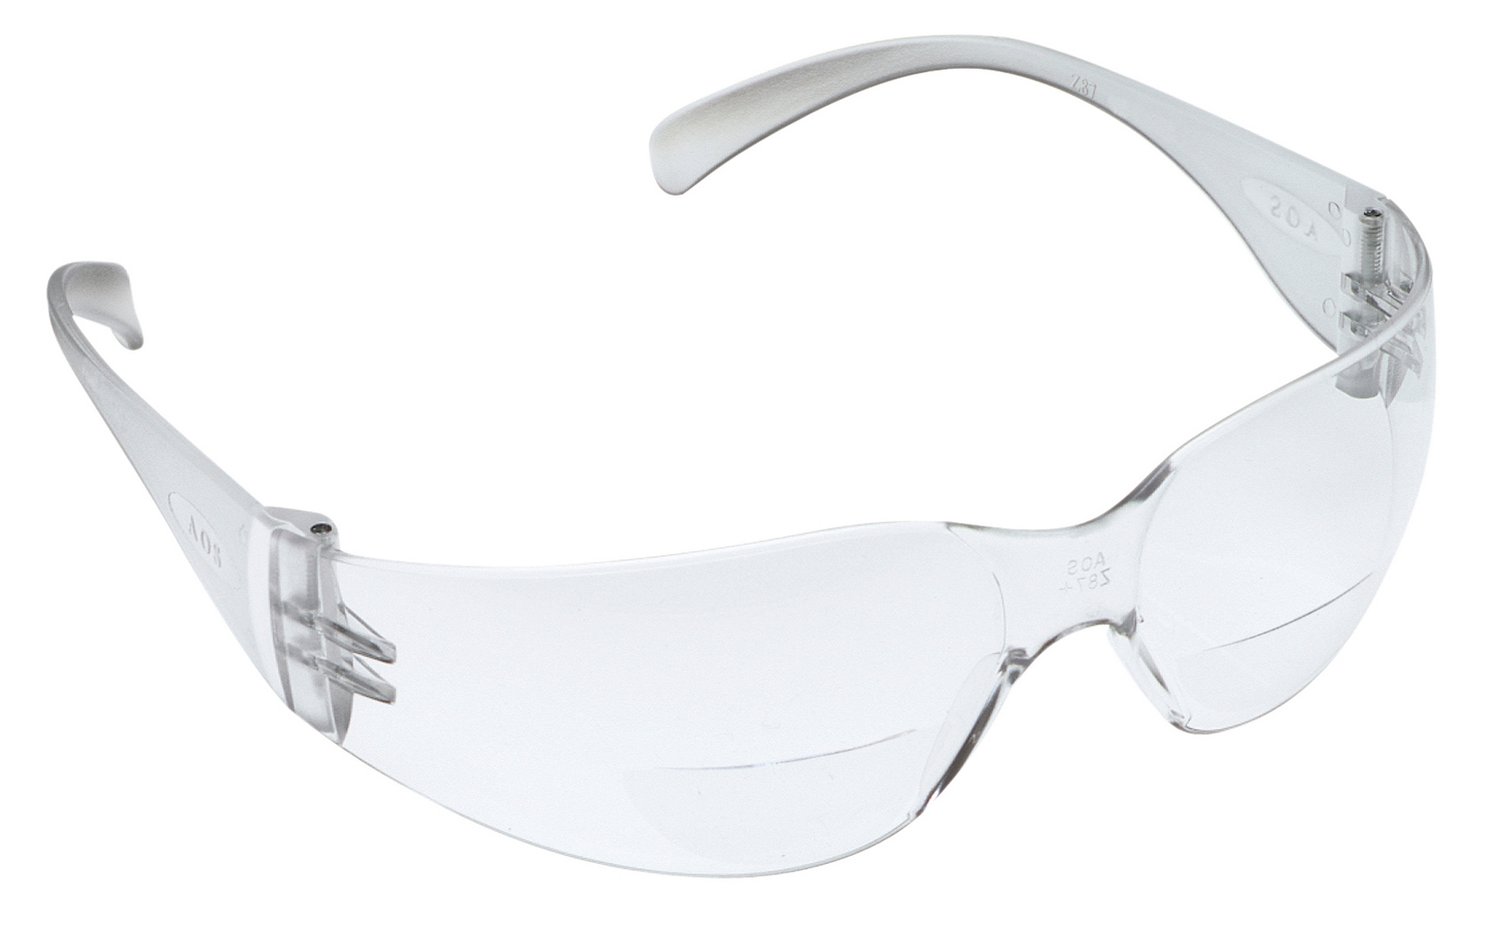 7000127511 - 3M Virtua Reader Protective Eyewear 11513-00000-20 Clear Anti-Fog
Lens, Clear Temple, +1.5 Diopter 20 EA/Case